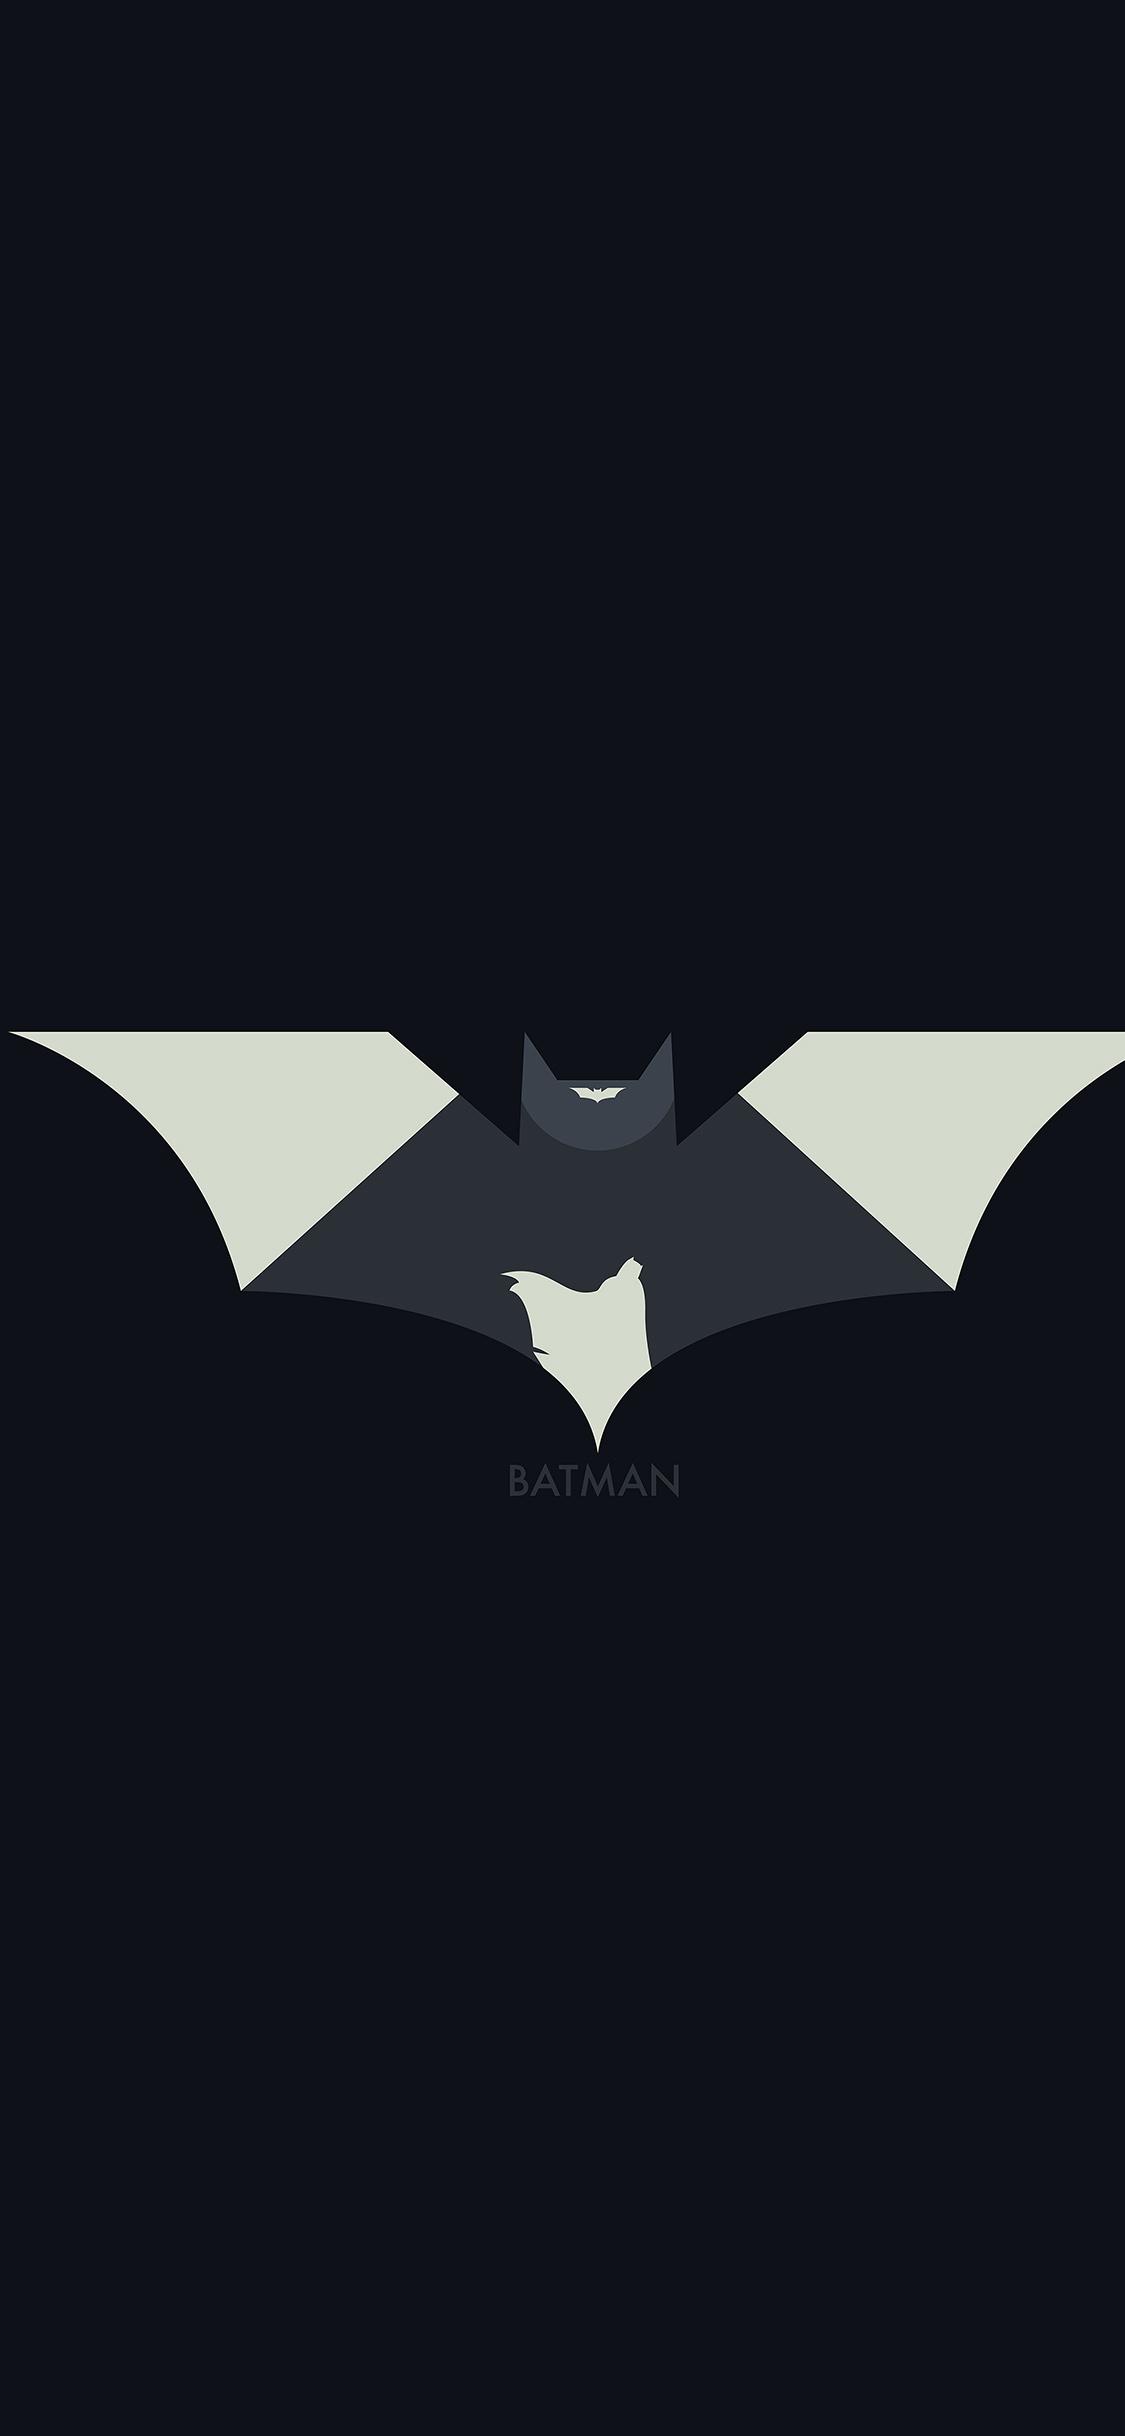 iPhone X wallpaper. hugoli art batman minimal logo illust dark